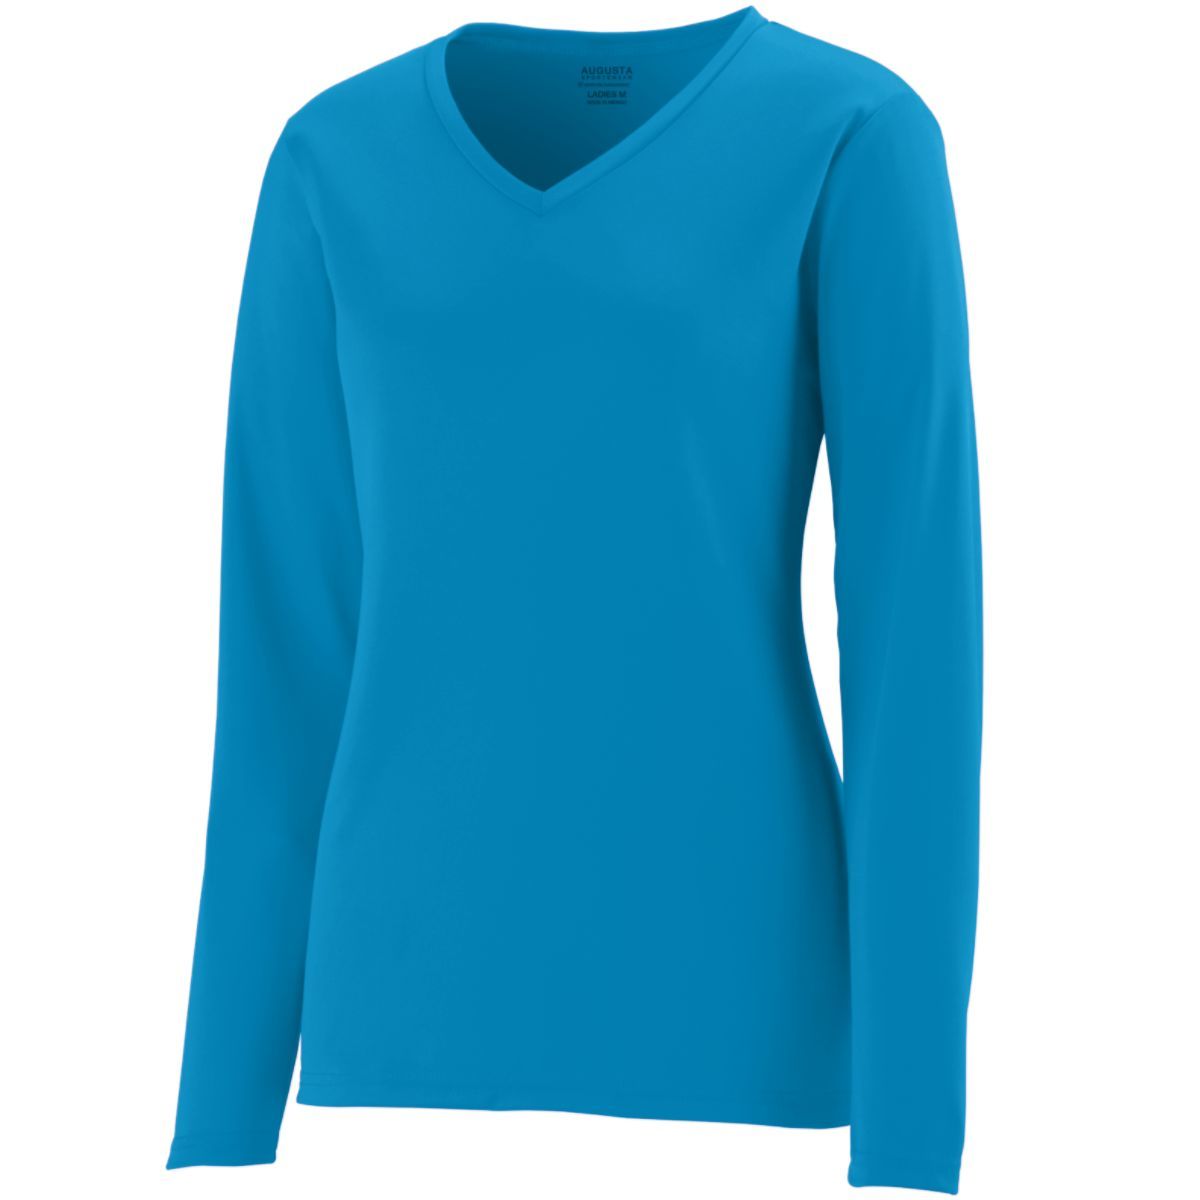 Augusta Sportswear Ladies Long Sleeve Wicking T-Shirt in Power Blue  -Part of the Ladies, Ladies-Tee-Shirt, T-Shirts, Augusta-Products, Shirts product lines at KanaleyCreations.com